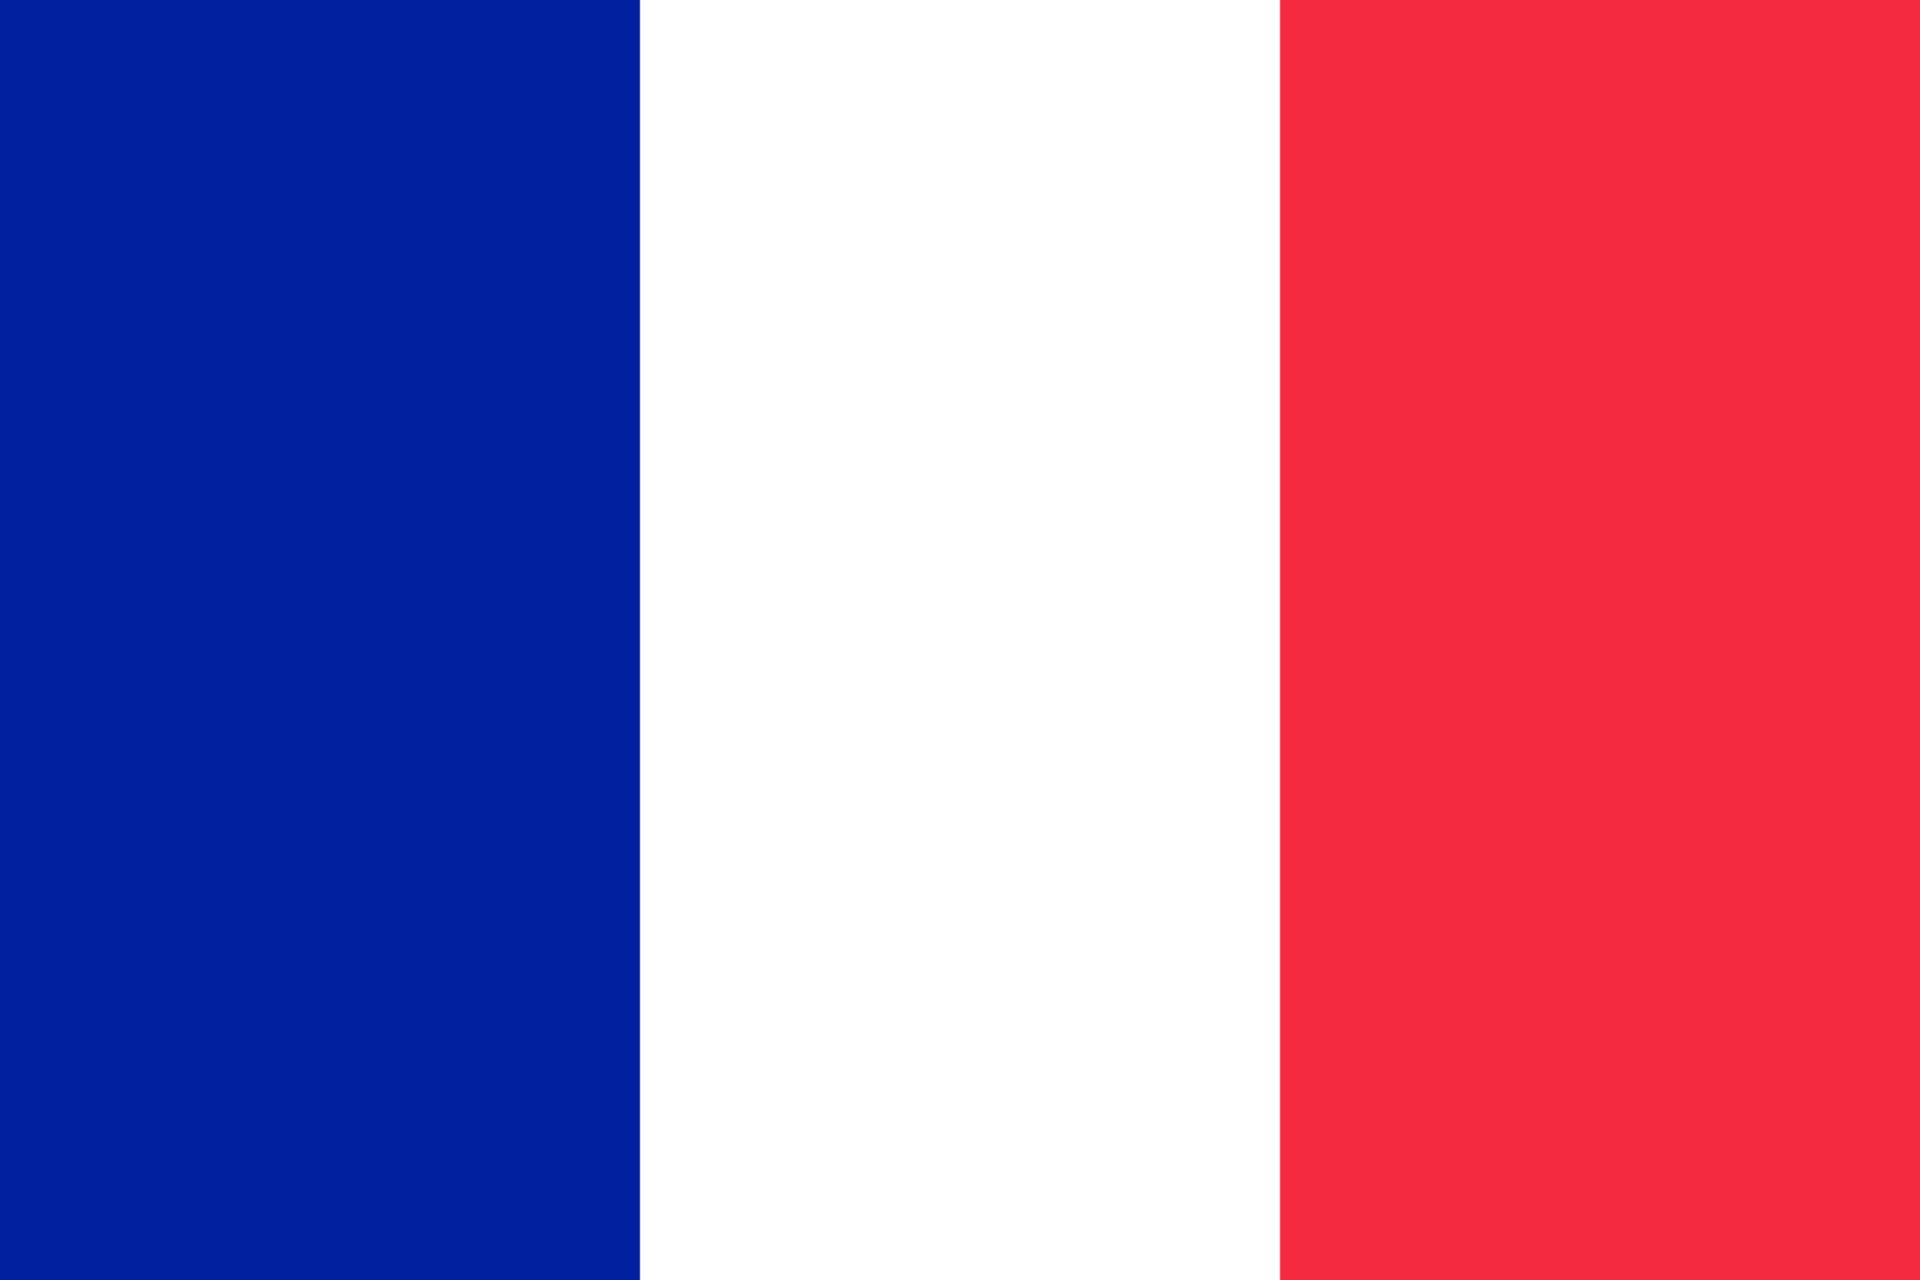 France flag - Harrison Flagpoles Quality Digital Print Handsewn Eco-flags